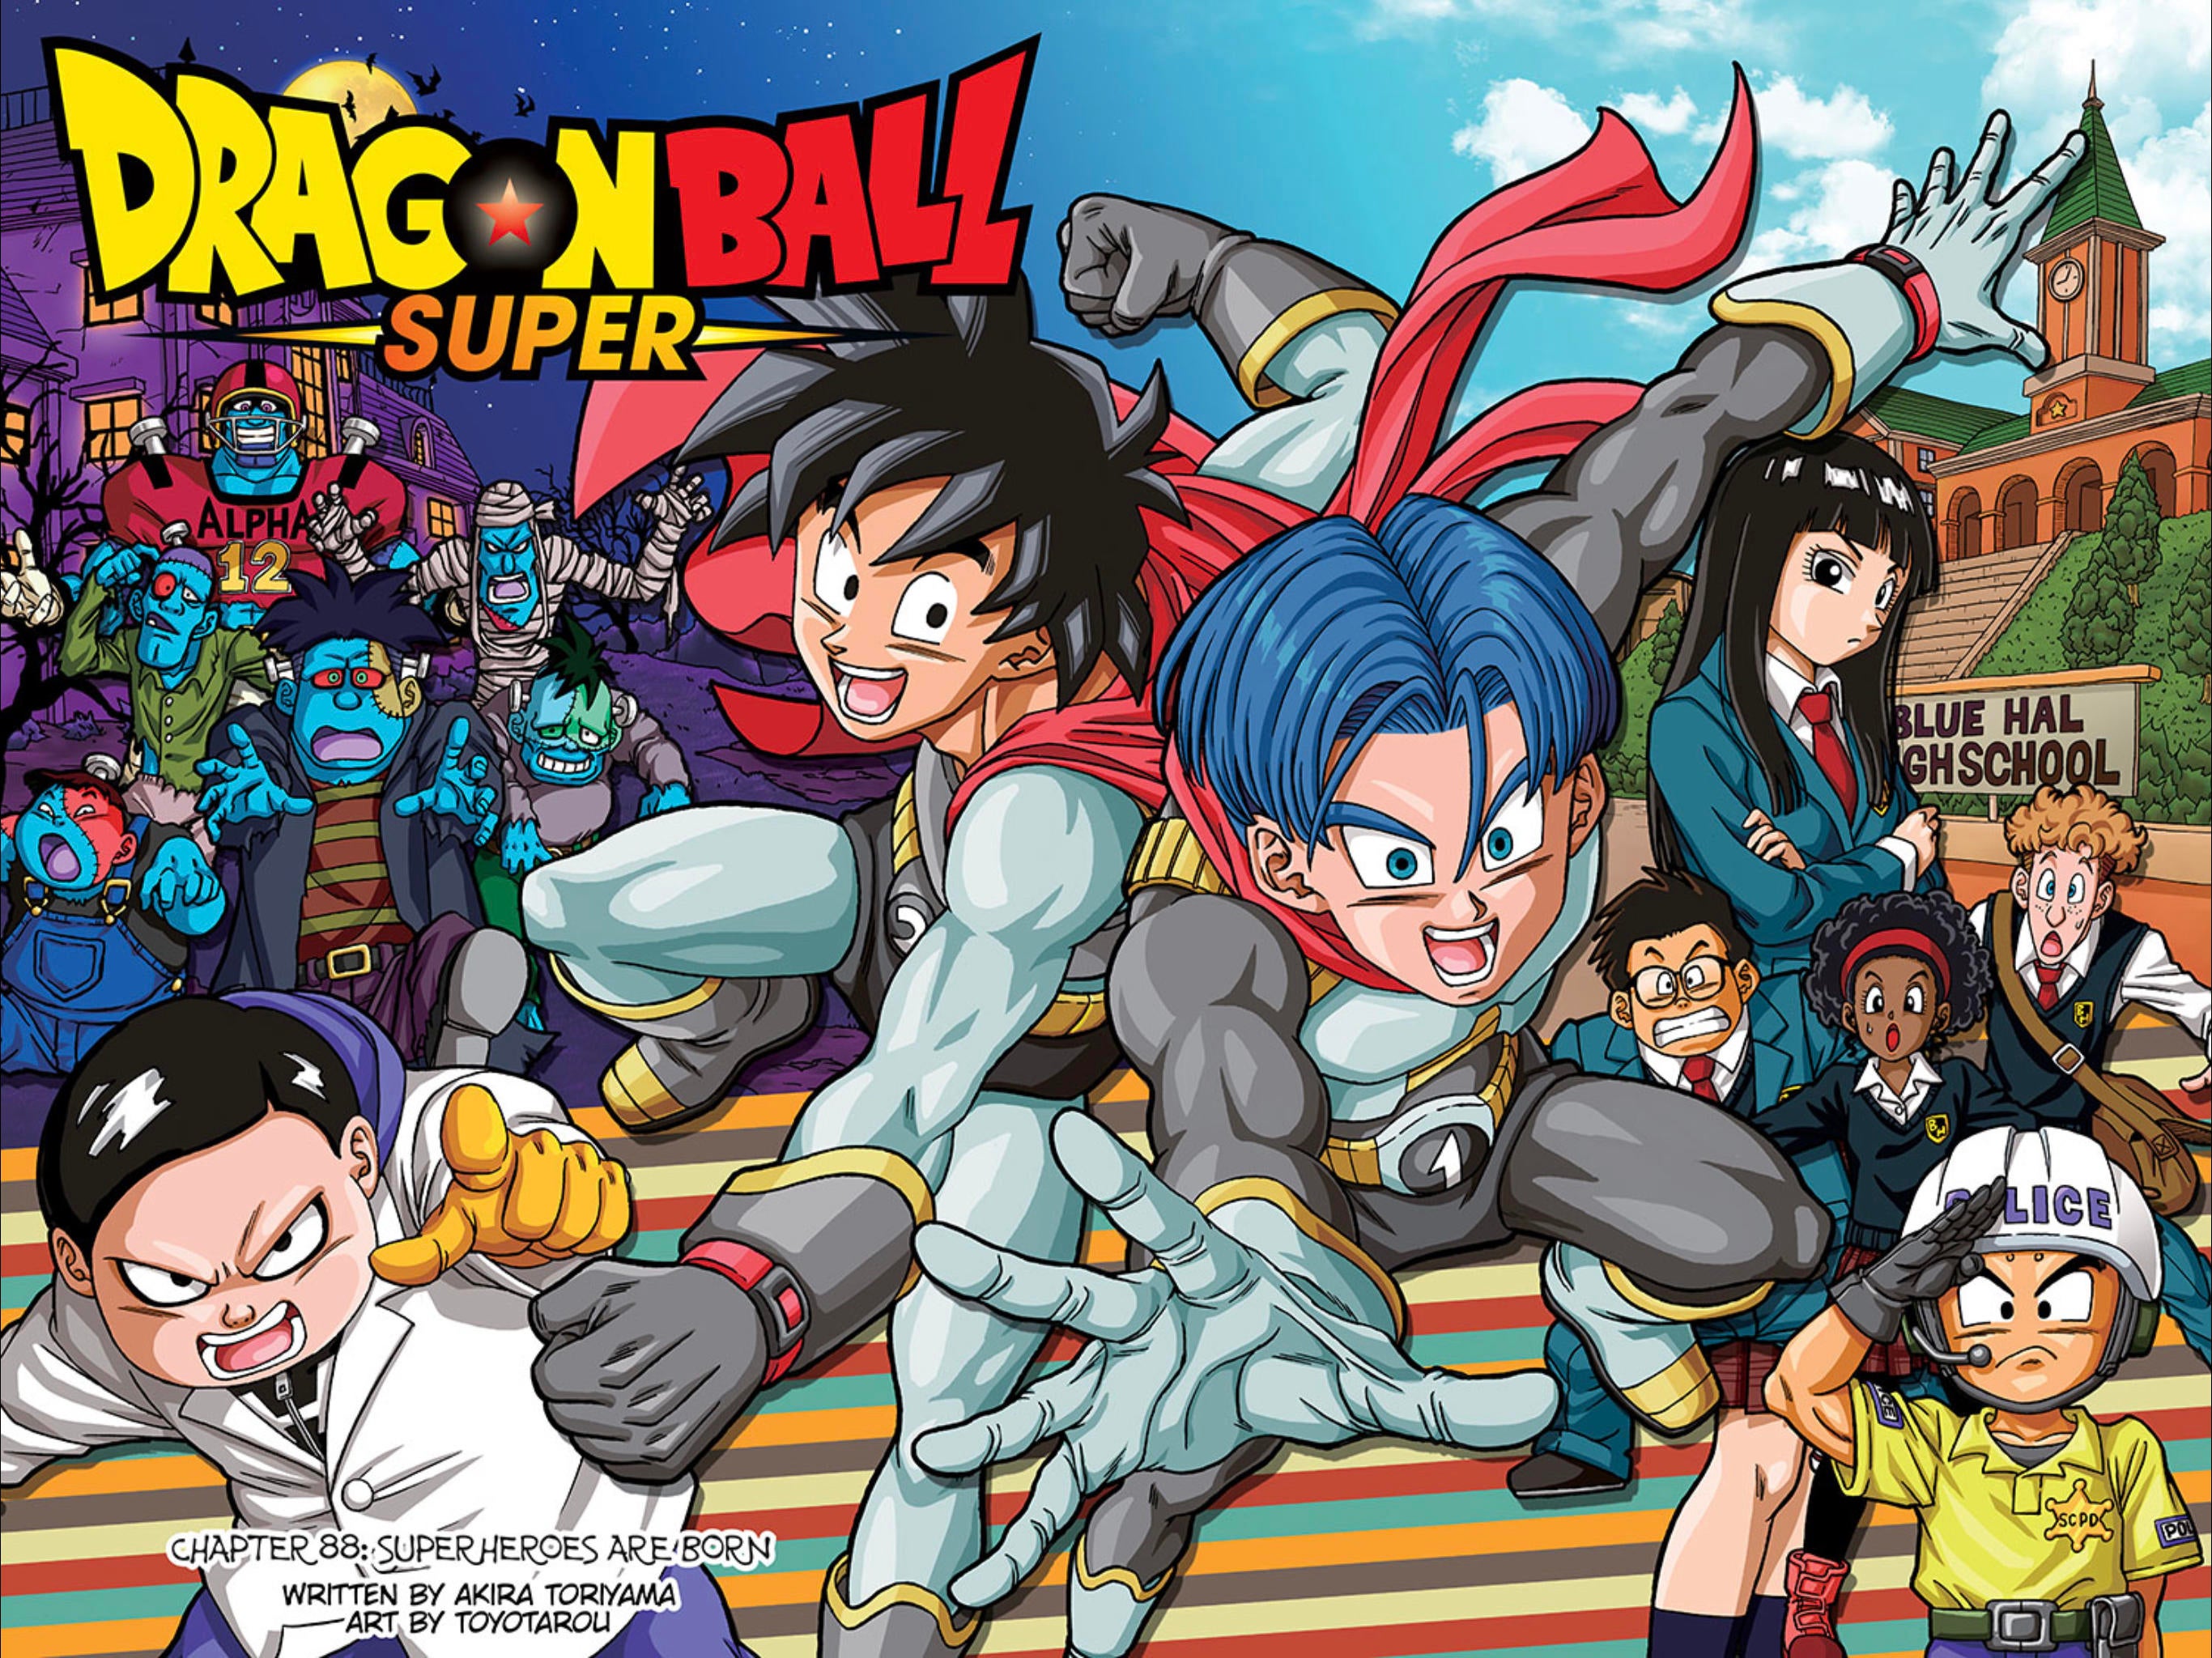 Dragon Ball Super Introduces 2 Superheroes